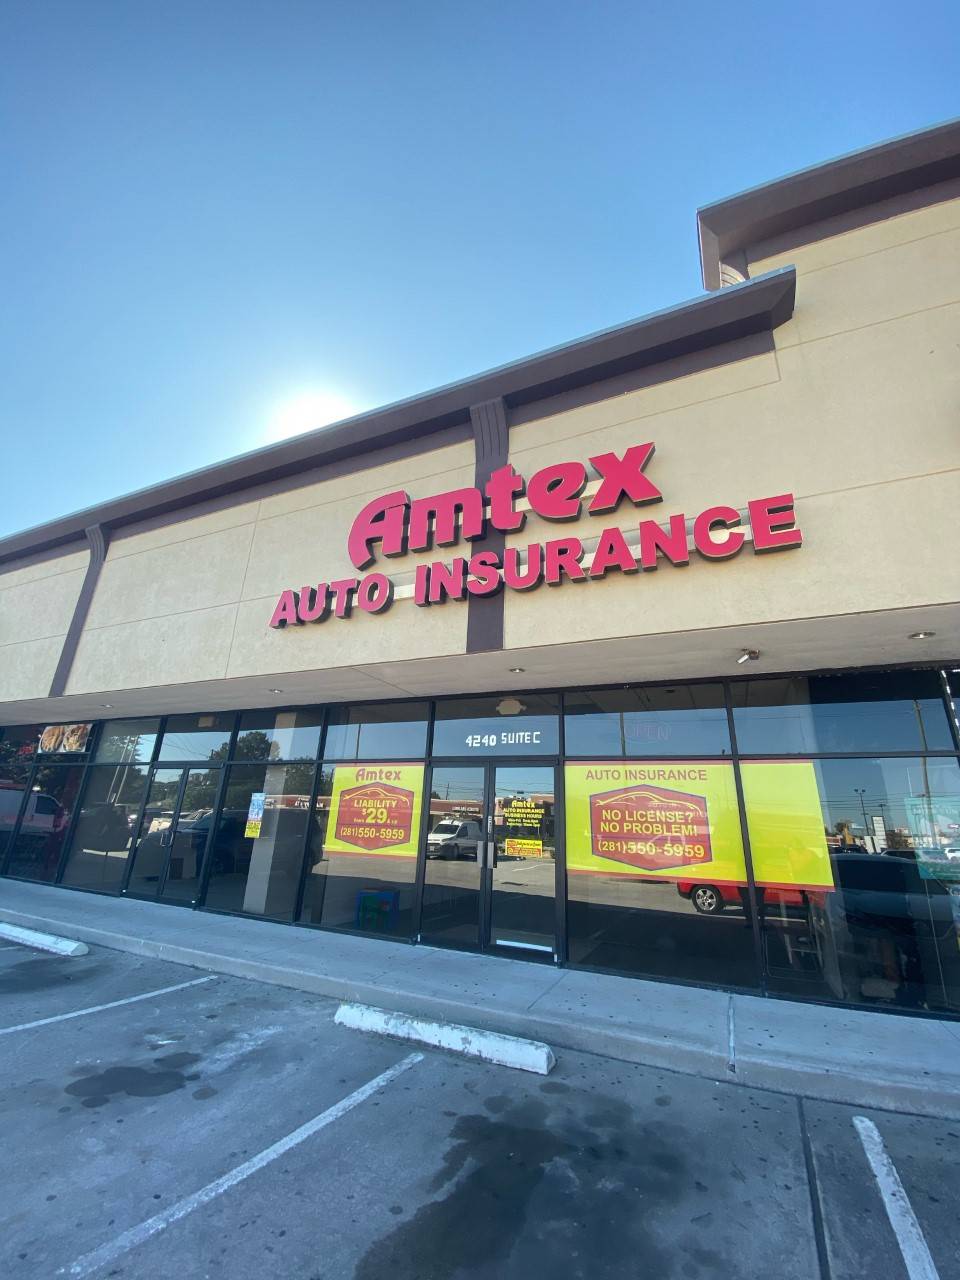 Amtex Auto Insurance | 4240 Hwy 6 N suite c, Houston, TX 77084, USA | Phone: (281) 550-5959